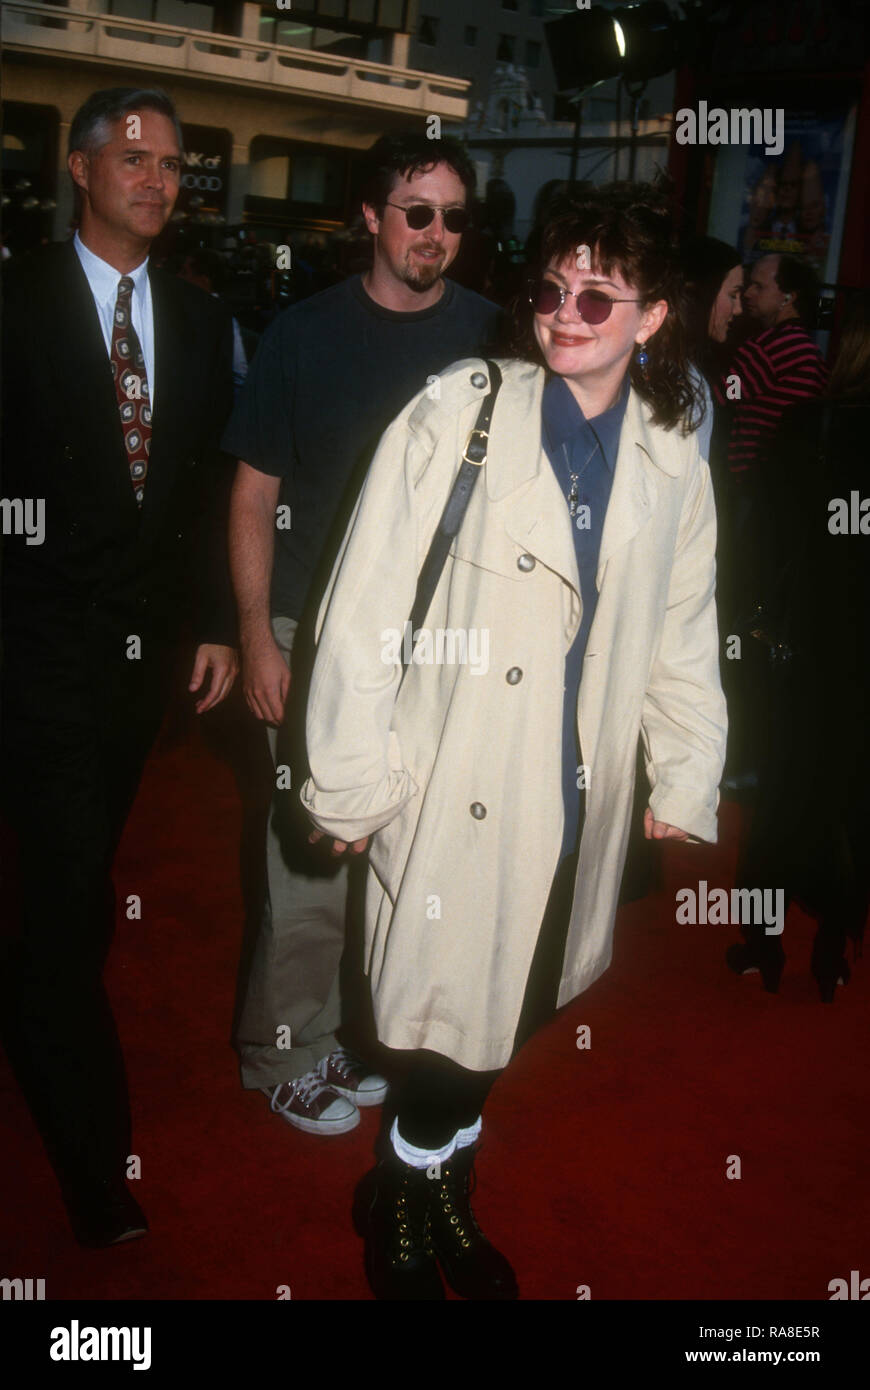 HOLLYWOOD, CA - le 19 juillet : L'actrice Julia Sweeney assiste à Paramount Pictures' 'Coneheads' création le 19 juillet 1993 au Mann Chinese Theatre à Hollywood, Californie. Photo de Barry King/Alamy Stock Photo Banque D'Images